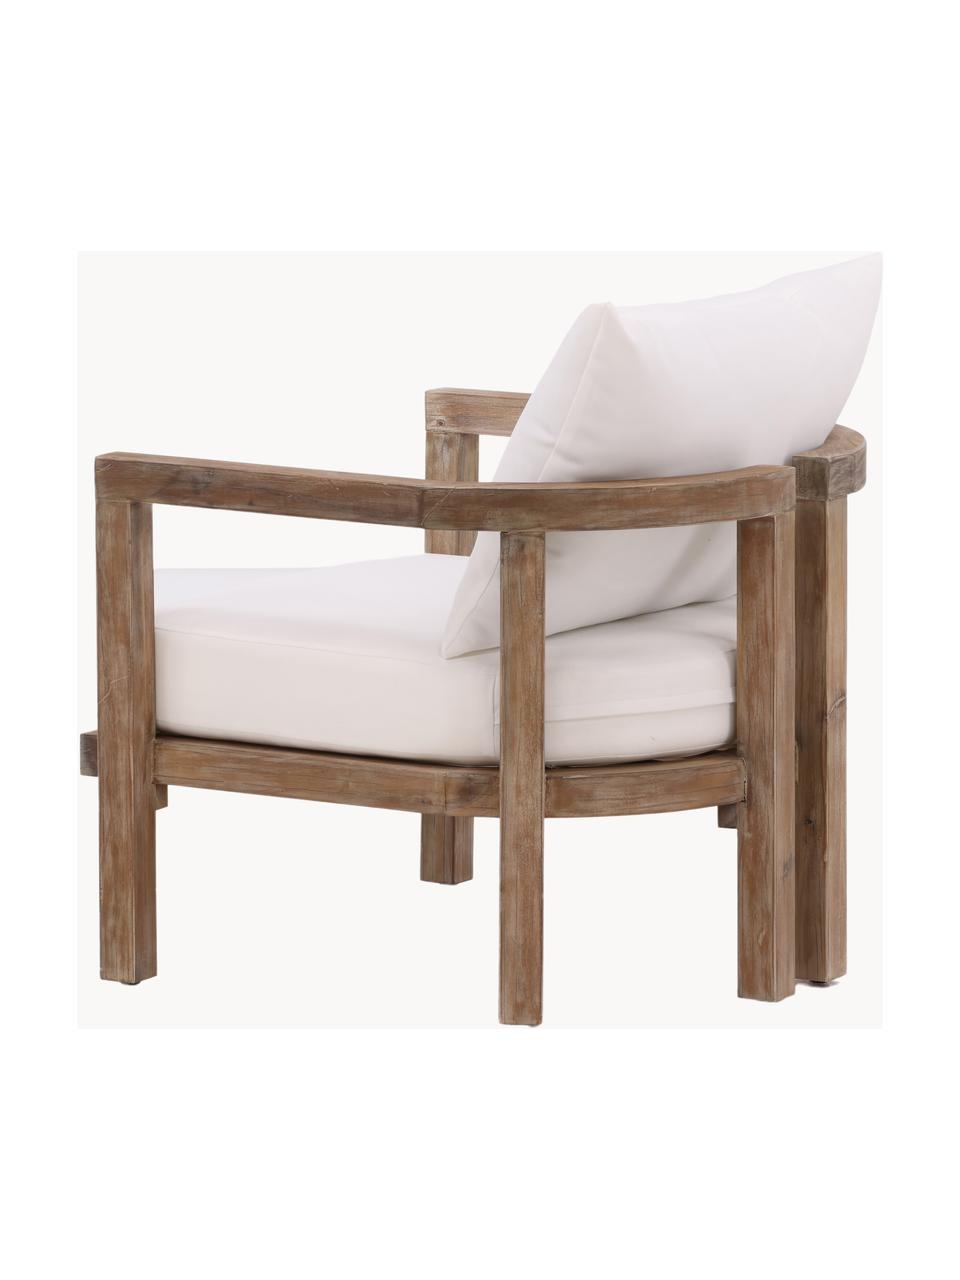 Chaise de jardin en bois d'acacia Erica, Tissu blanc crème, bois d'acacia, larg. 71 x haut. 55 cm